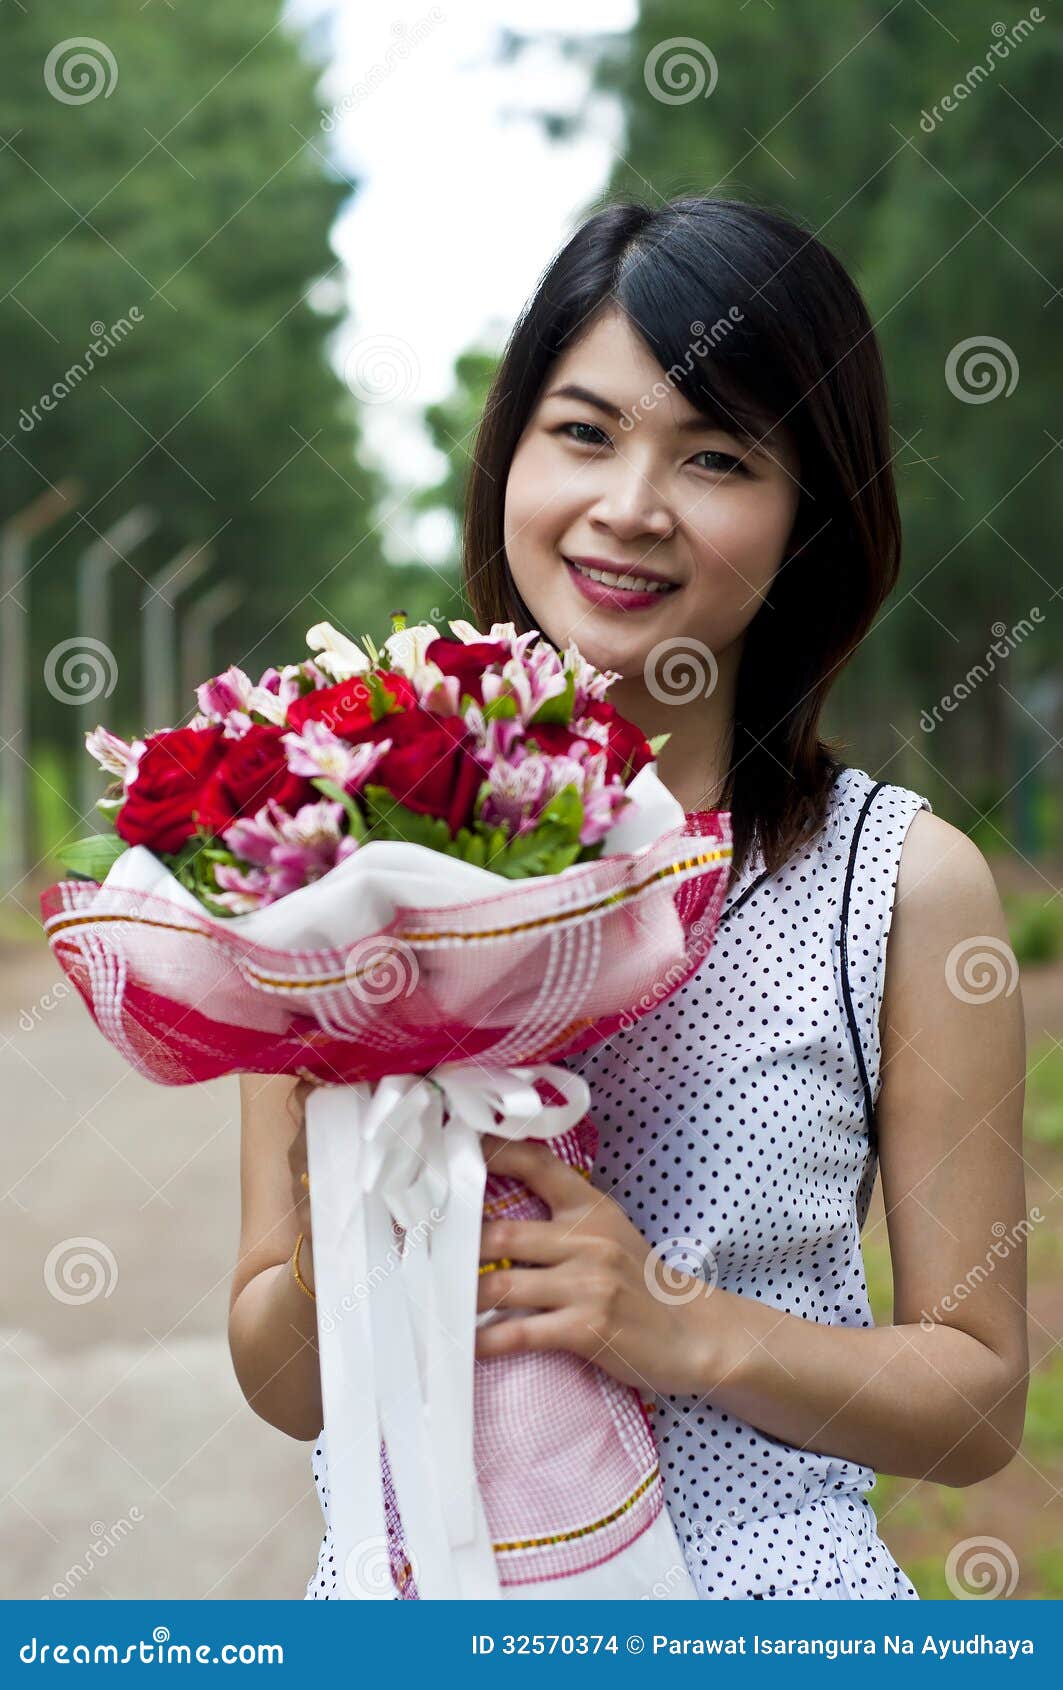 http://thumbs.dreamstime.com/z/beautiful-woman-love-asian-holding-flora-bouquet-32570374.jpg